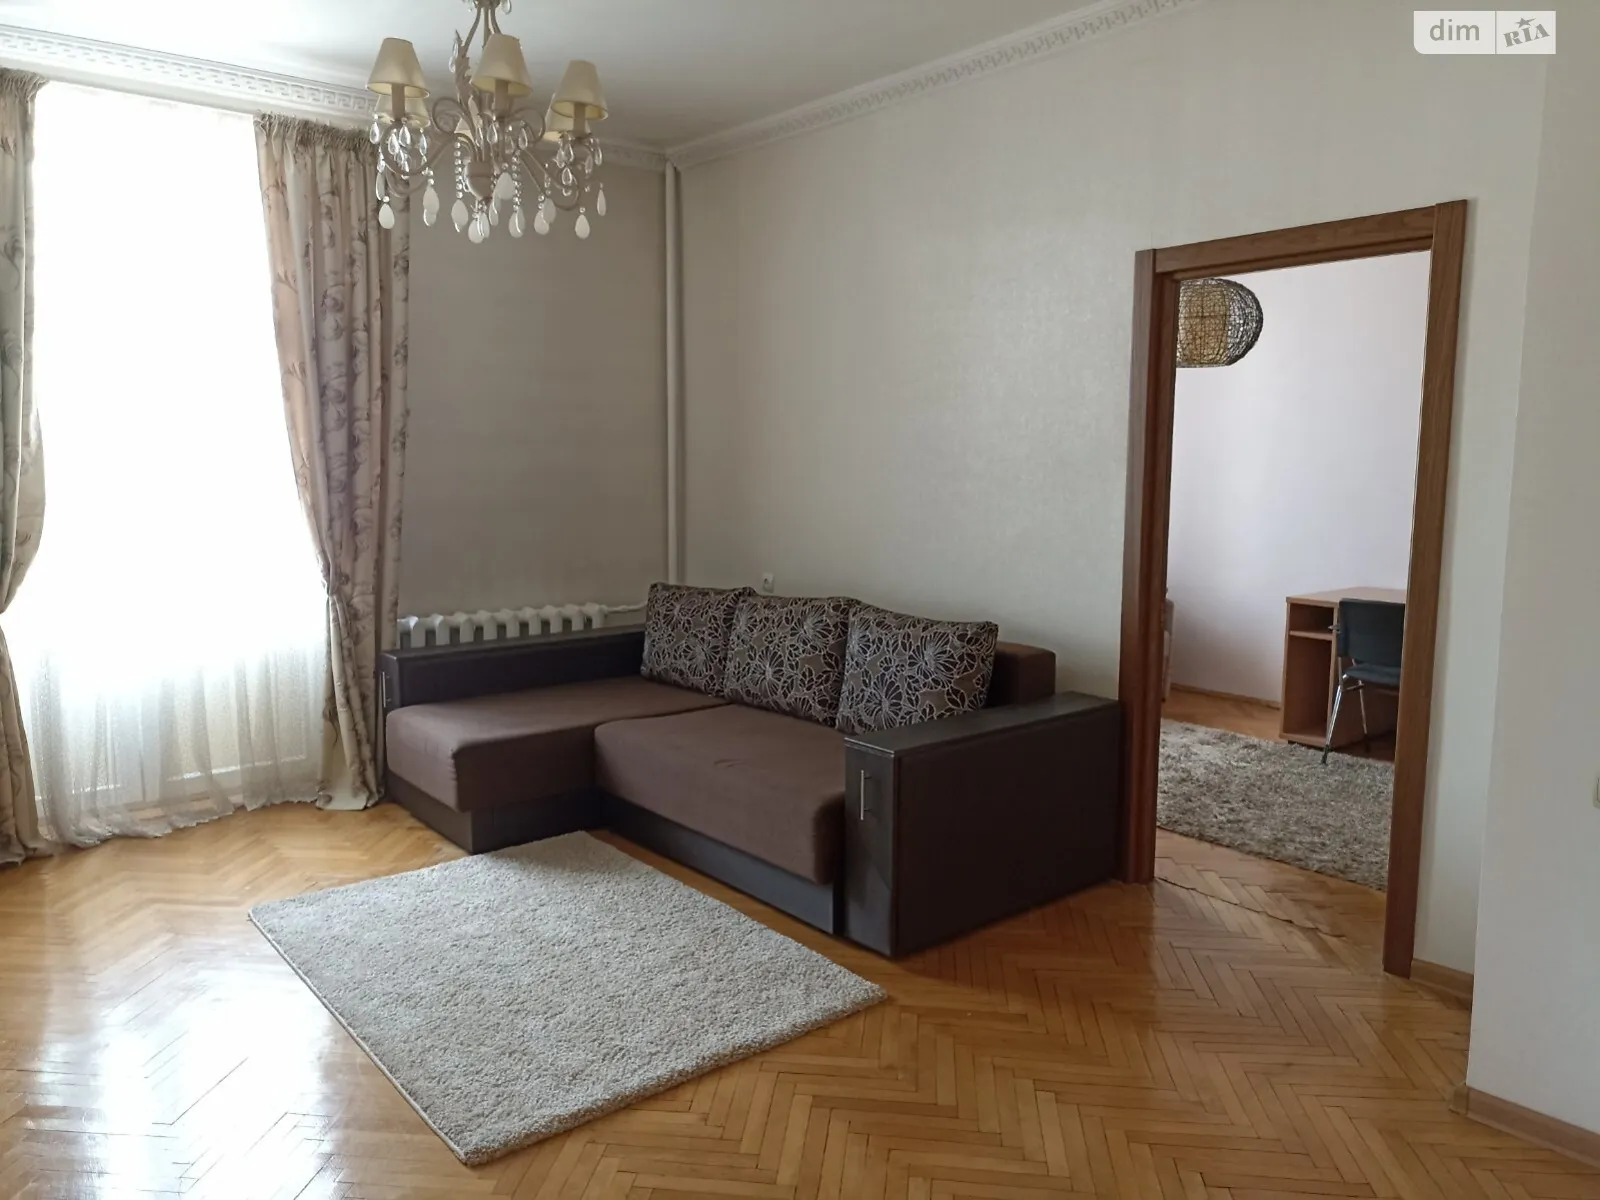 Сдается в аренду 2-комнатная квартира 60 кв. м в Львове, ул. Гнатюка Академика - фото 1